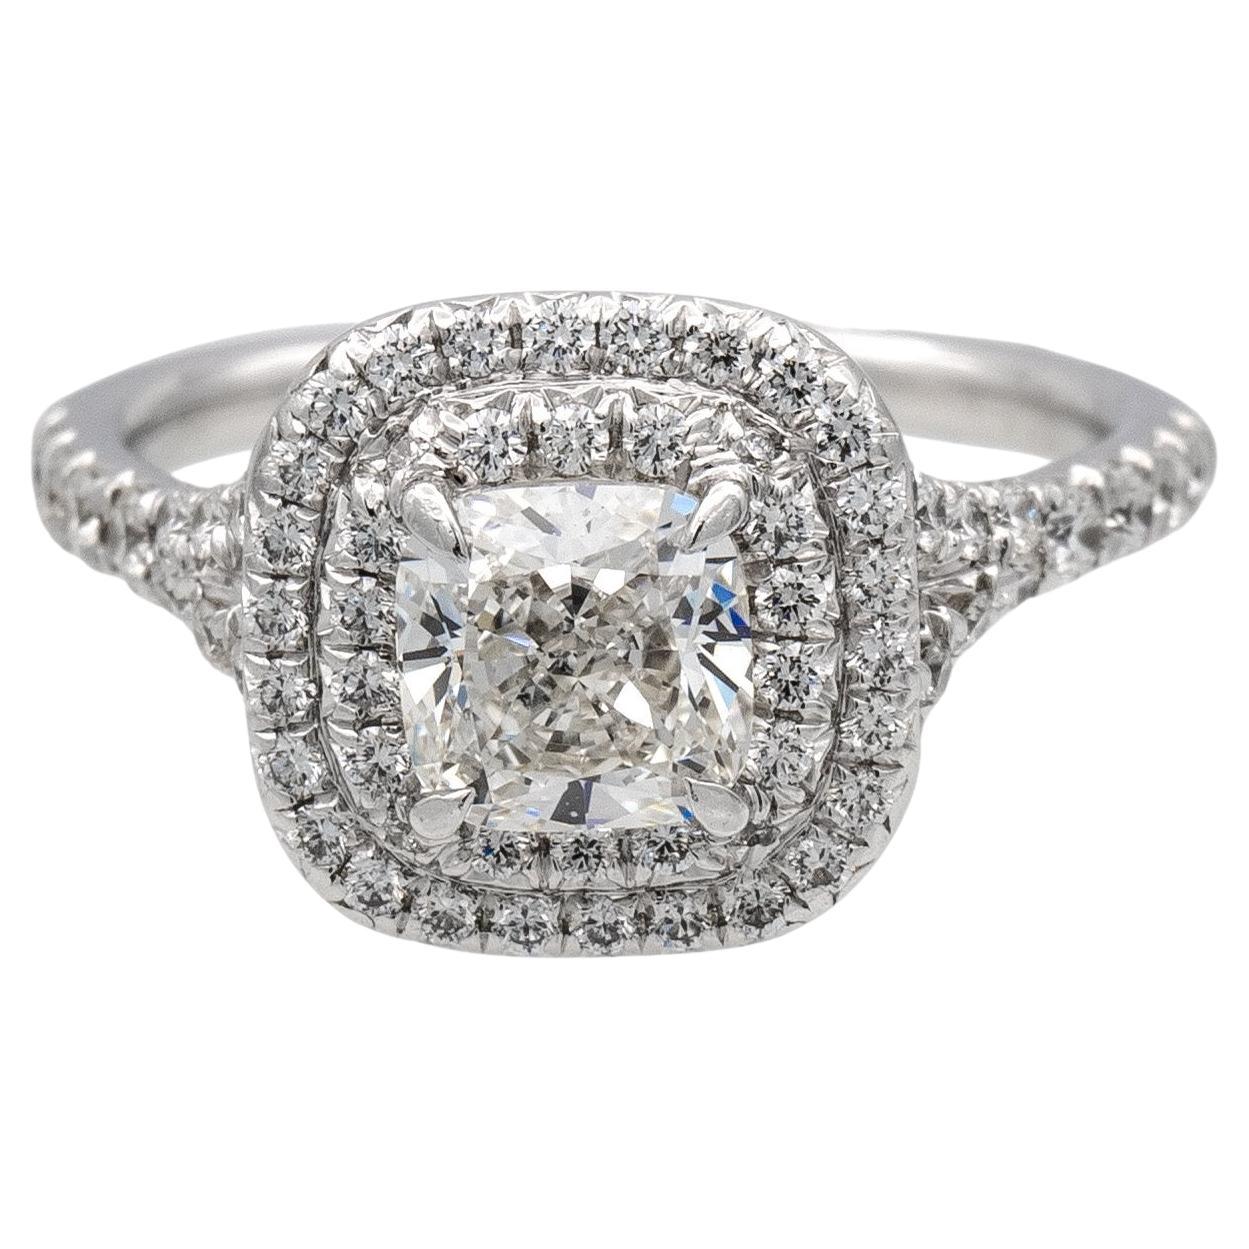 Tiffany & Co. Soleste Platinum Cushion Diamond Engagement Ring 1.02Cts Ttl GVVS2